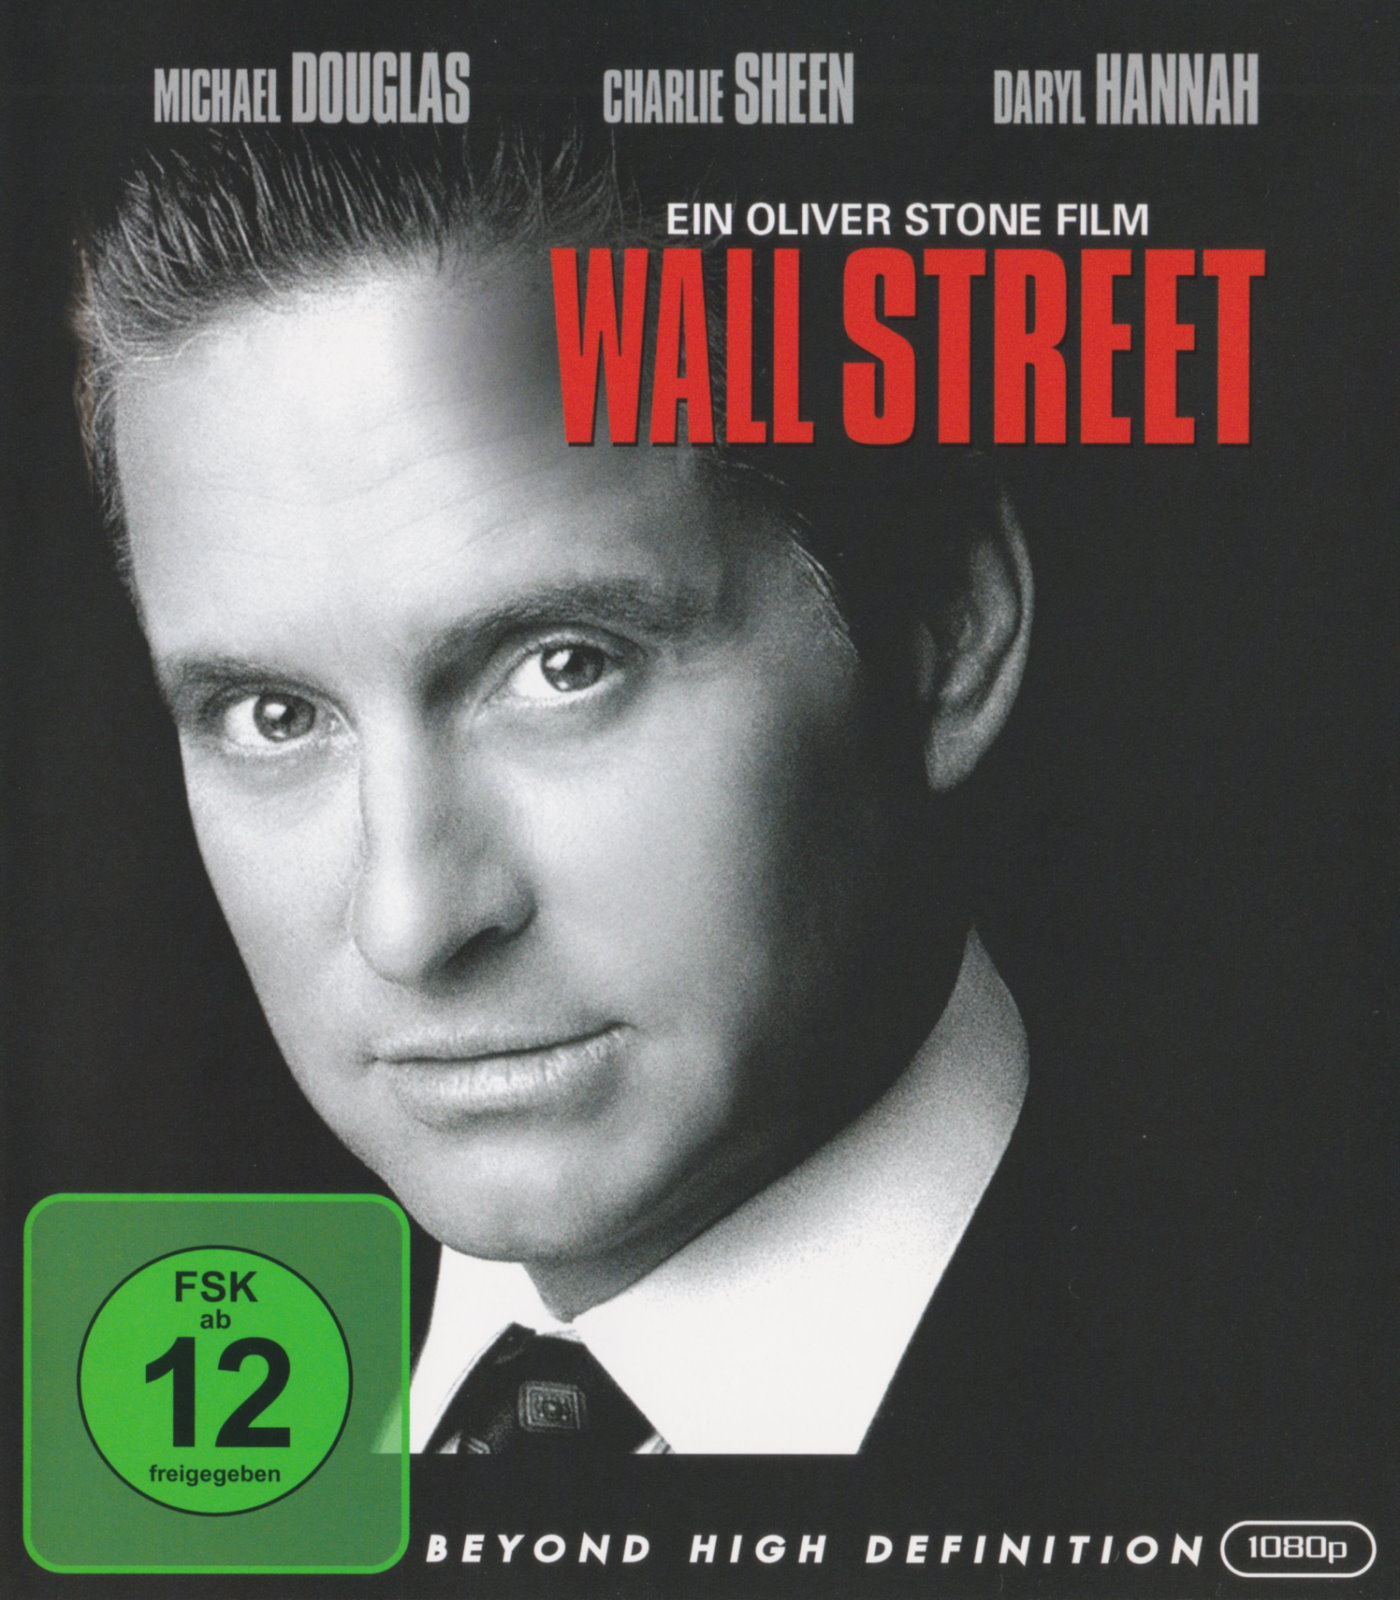 Cover - Wall Street.jpg